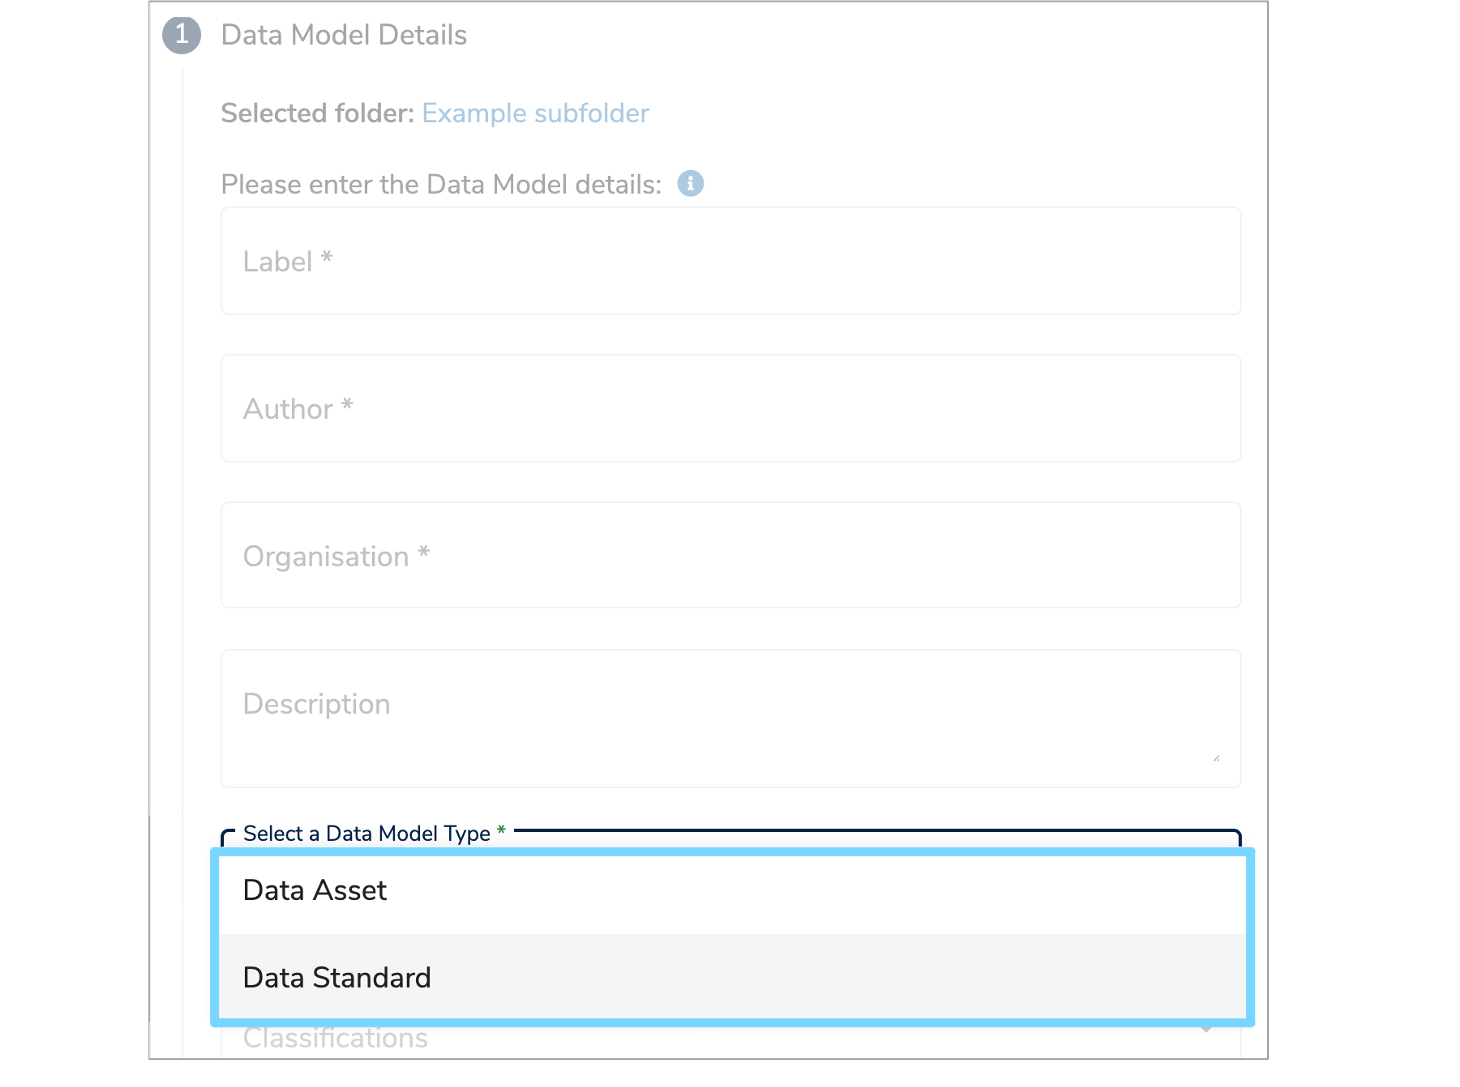 Data Type dropdown menu on Data Model details form